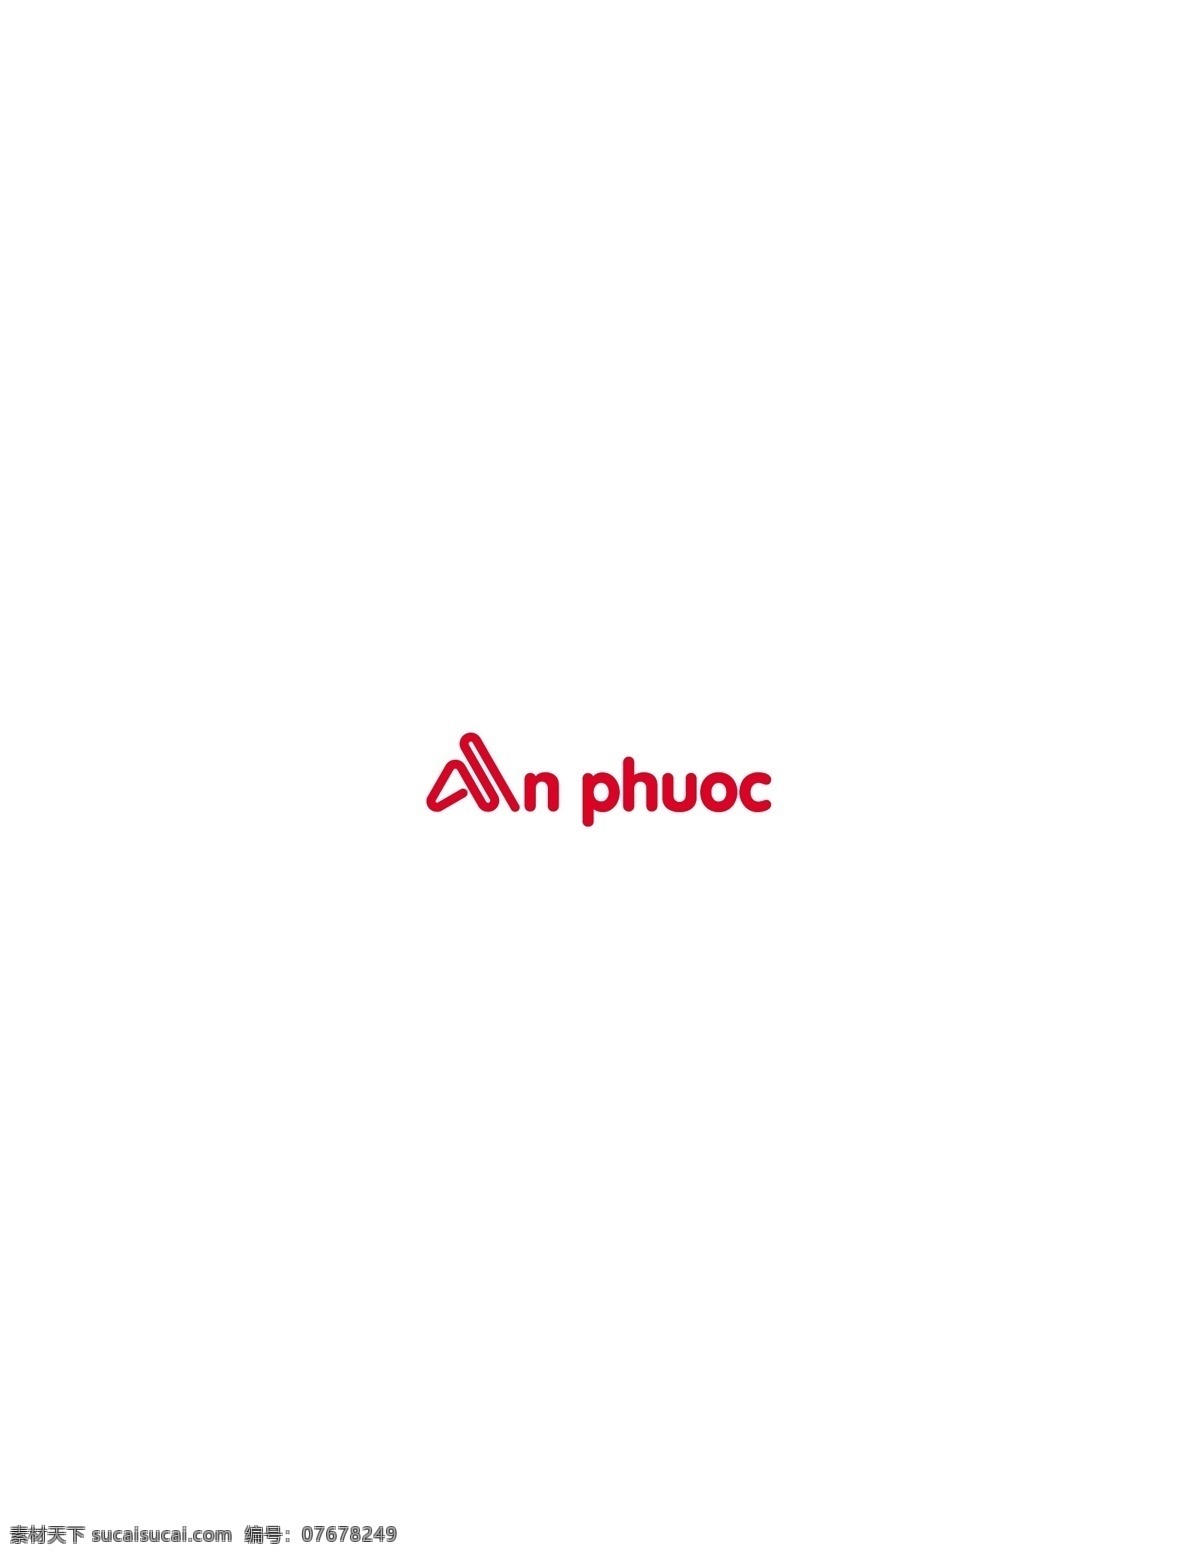 anphuoc logo大全 logo 设计欣赏 商业矢量 矢量下载 服装 品牌 标志 标志设计 欣赏 网页矢量 矢量图 其他矢量图